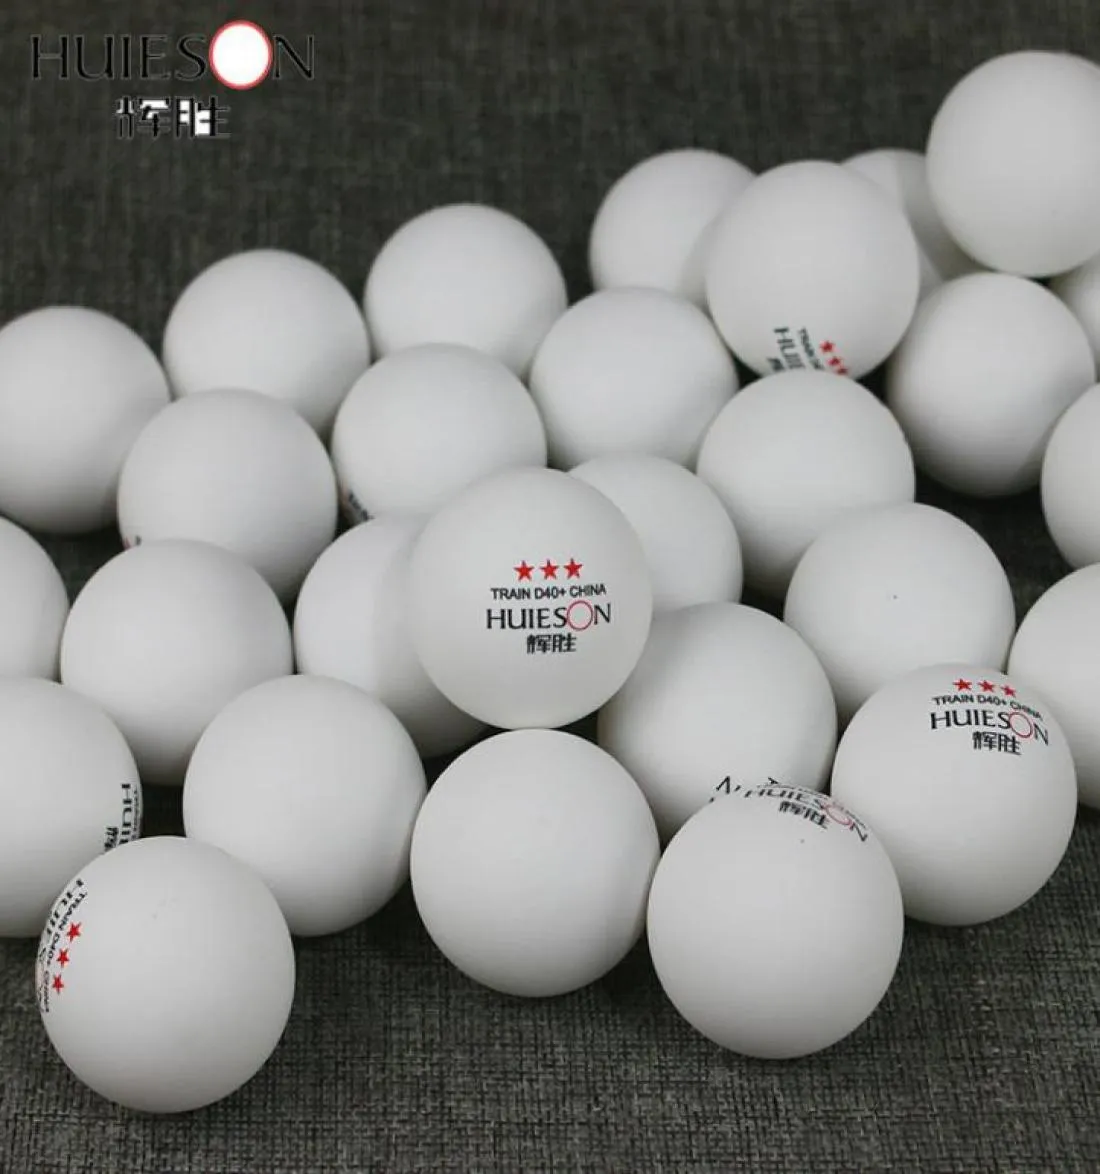 Huieson 100 szt. 3star 40 mm 28G Balle tenisowe stołowe Ping Pong Balls do dopasowania Nowe materiały Abs Plastikowe kulki treningowe T190928013782